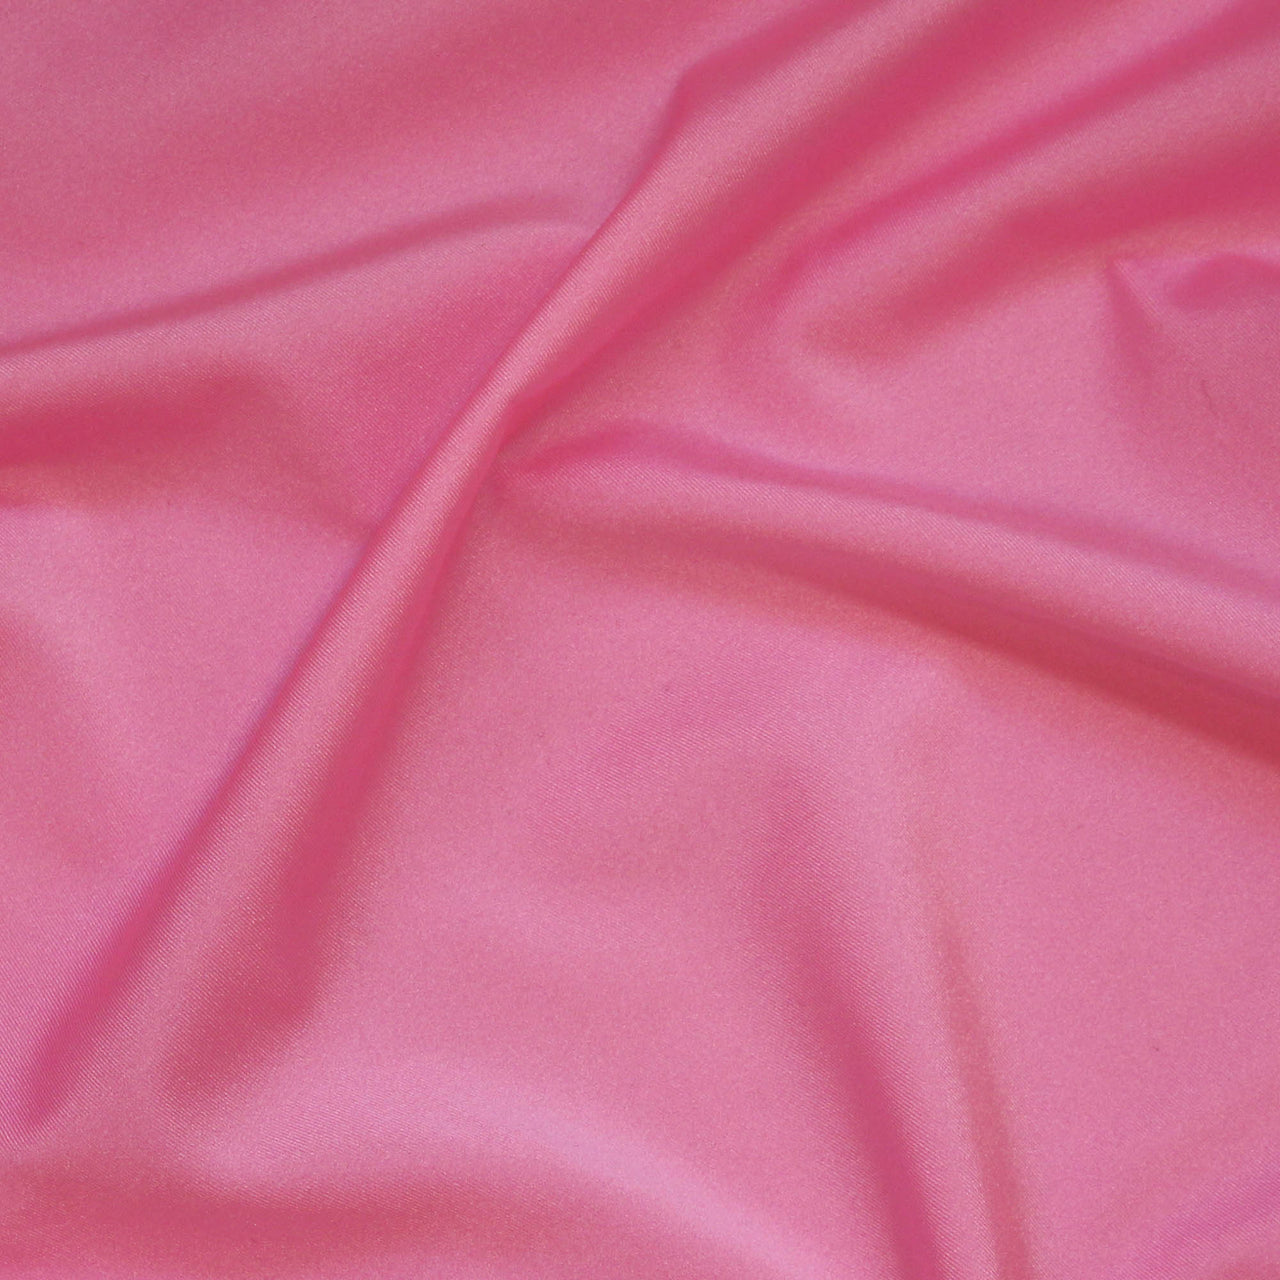 Candy Pink - Nylon Spandex Fabric - 4 Way All Way Stretch Superior Quality - Leotards, Dancewear